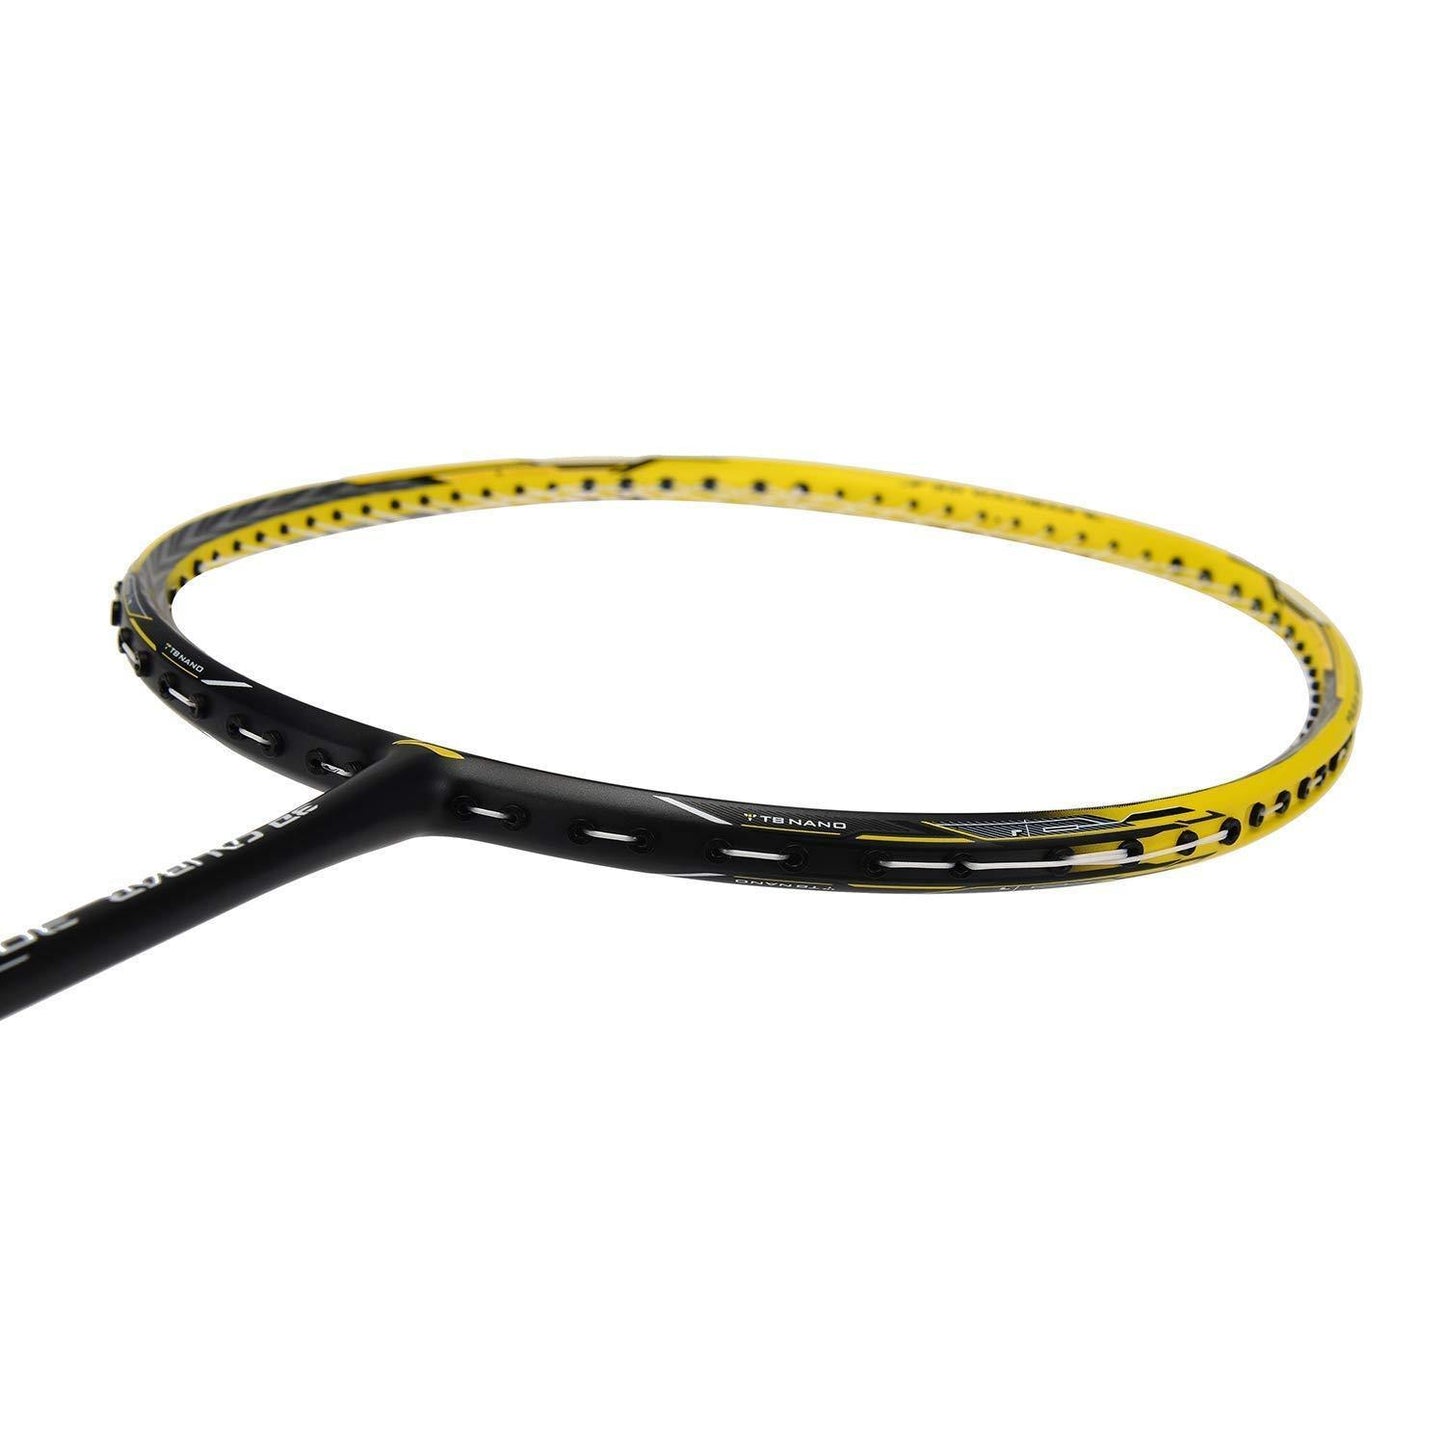 Li-ning 3D Caliber 300 Badminton Racquet Yellow/Grey - Best Price online Prokicksports.com